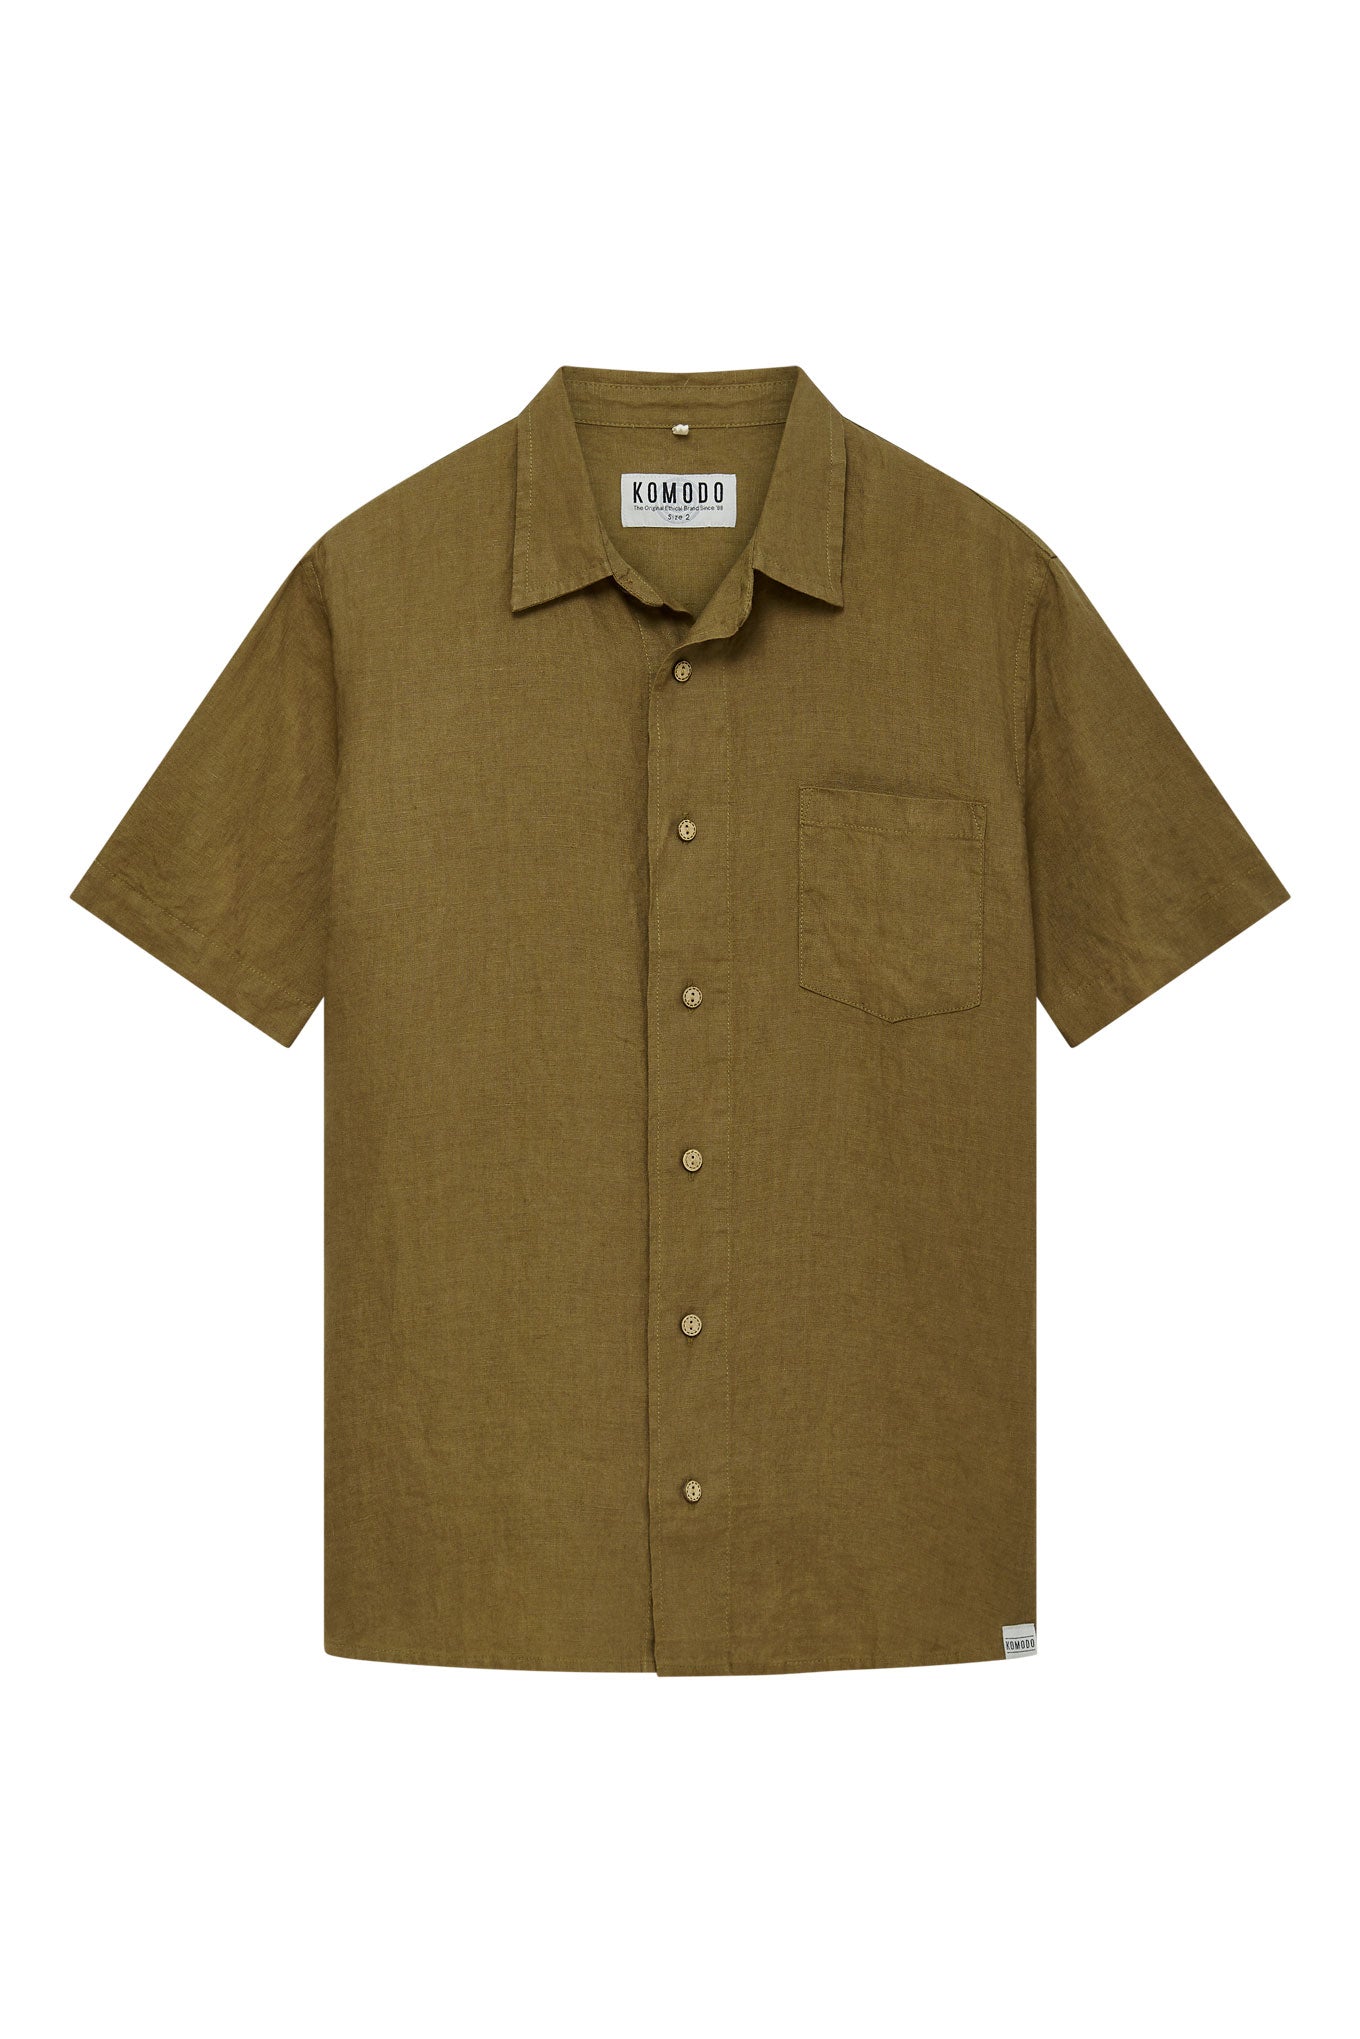 Komodo Men's Black Dingwalls - Linen Shirt Khaki In Brown